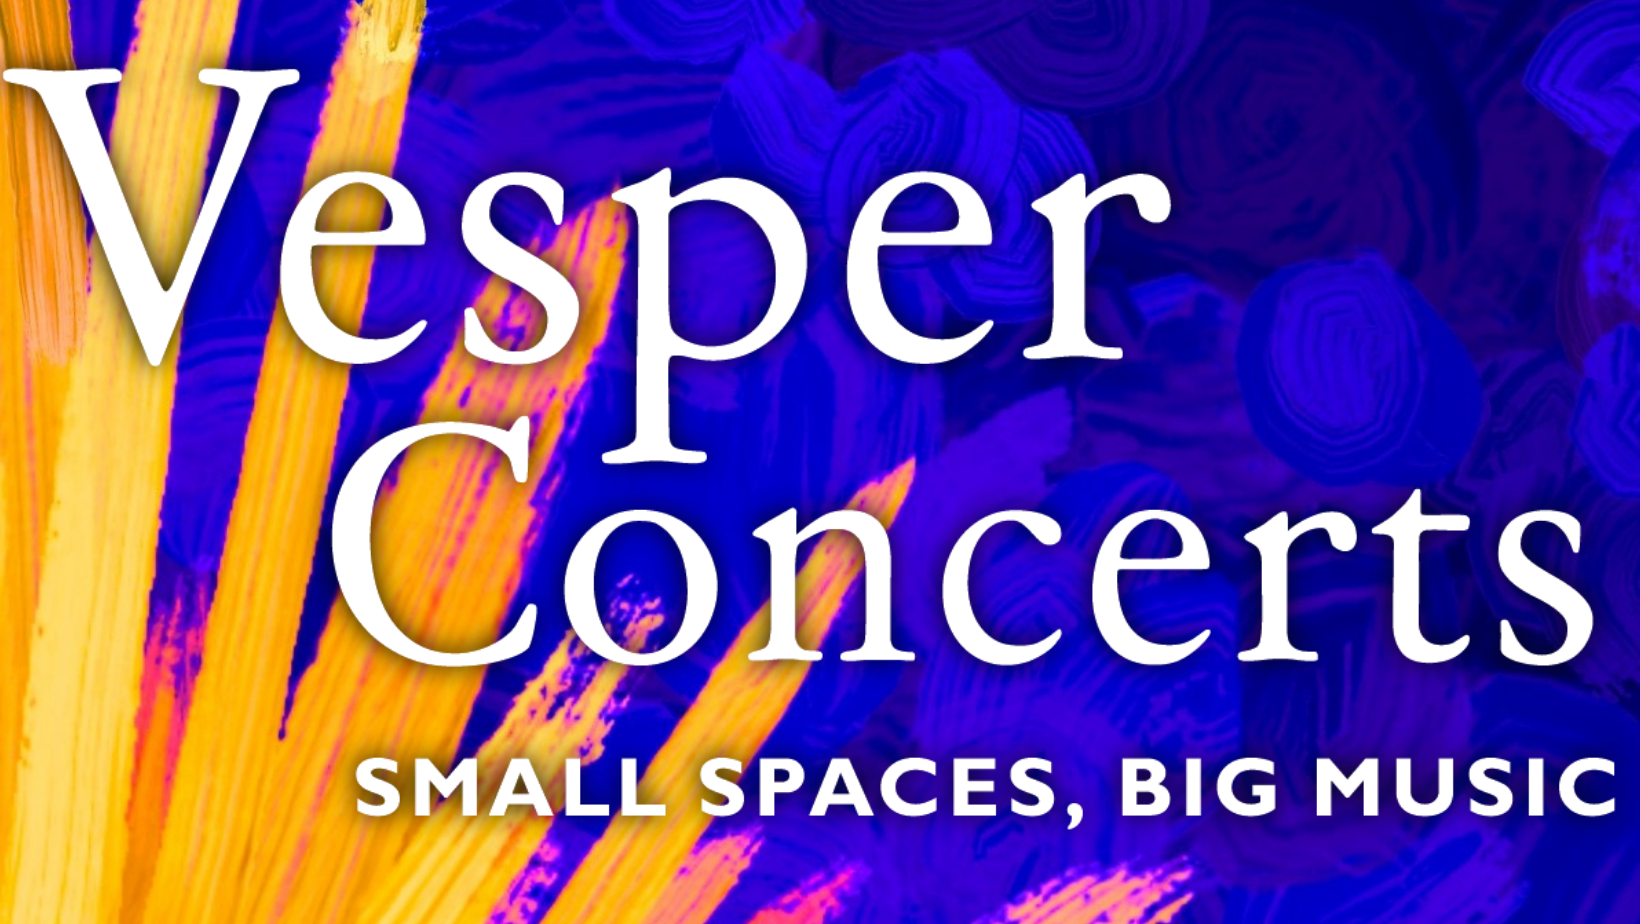 Vesper Concerts